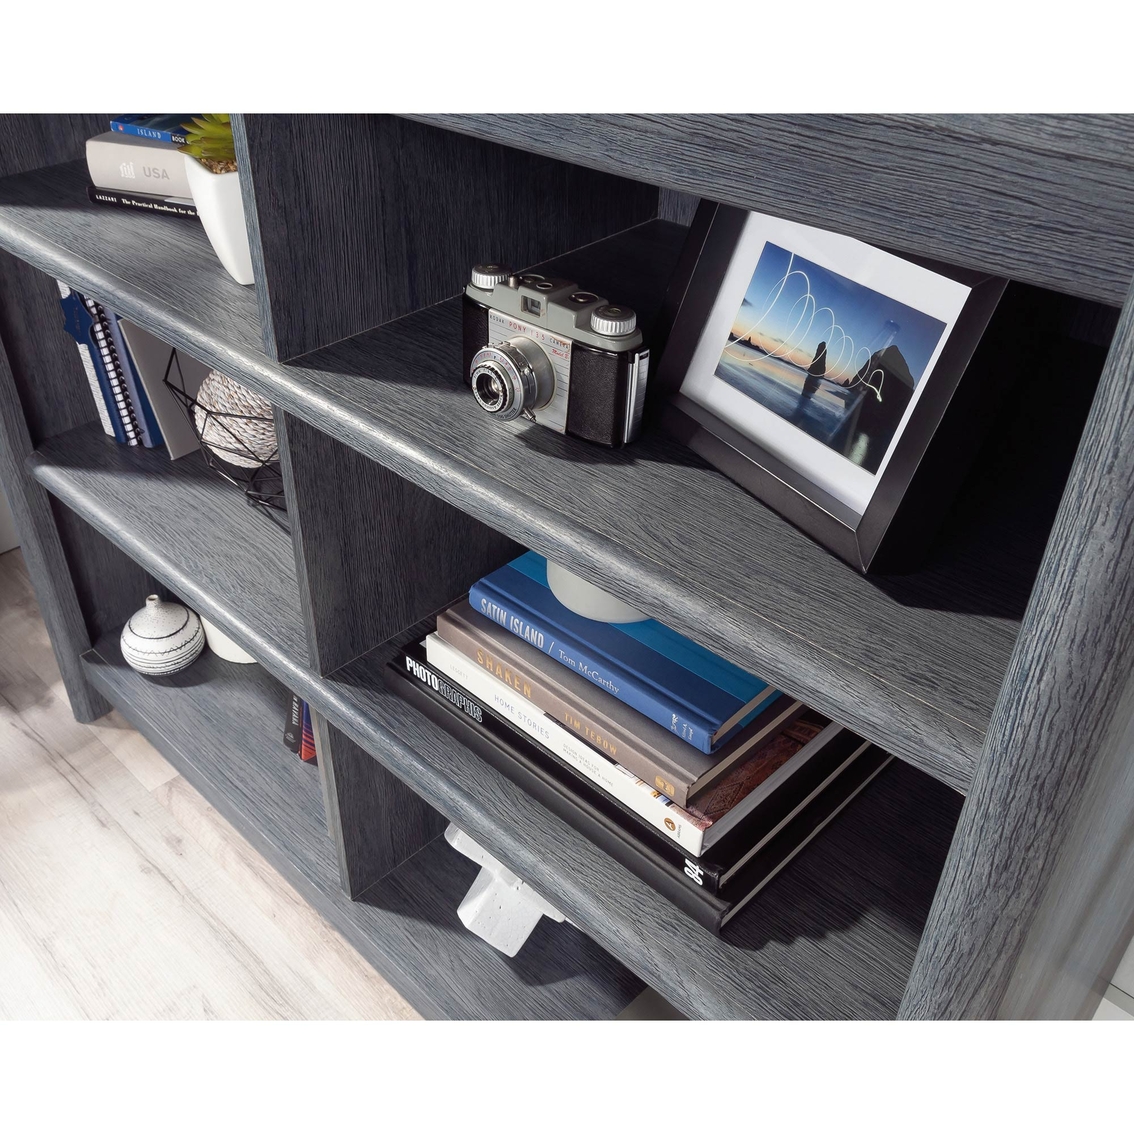 Sauder Cubby Storage Bookcase in Denim Oak - Image 4 of 6